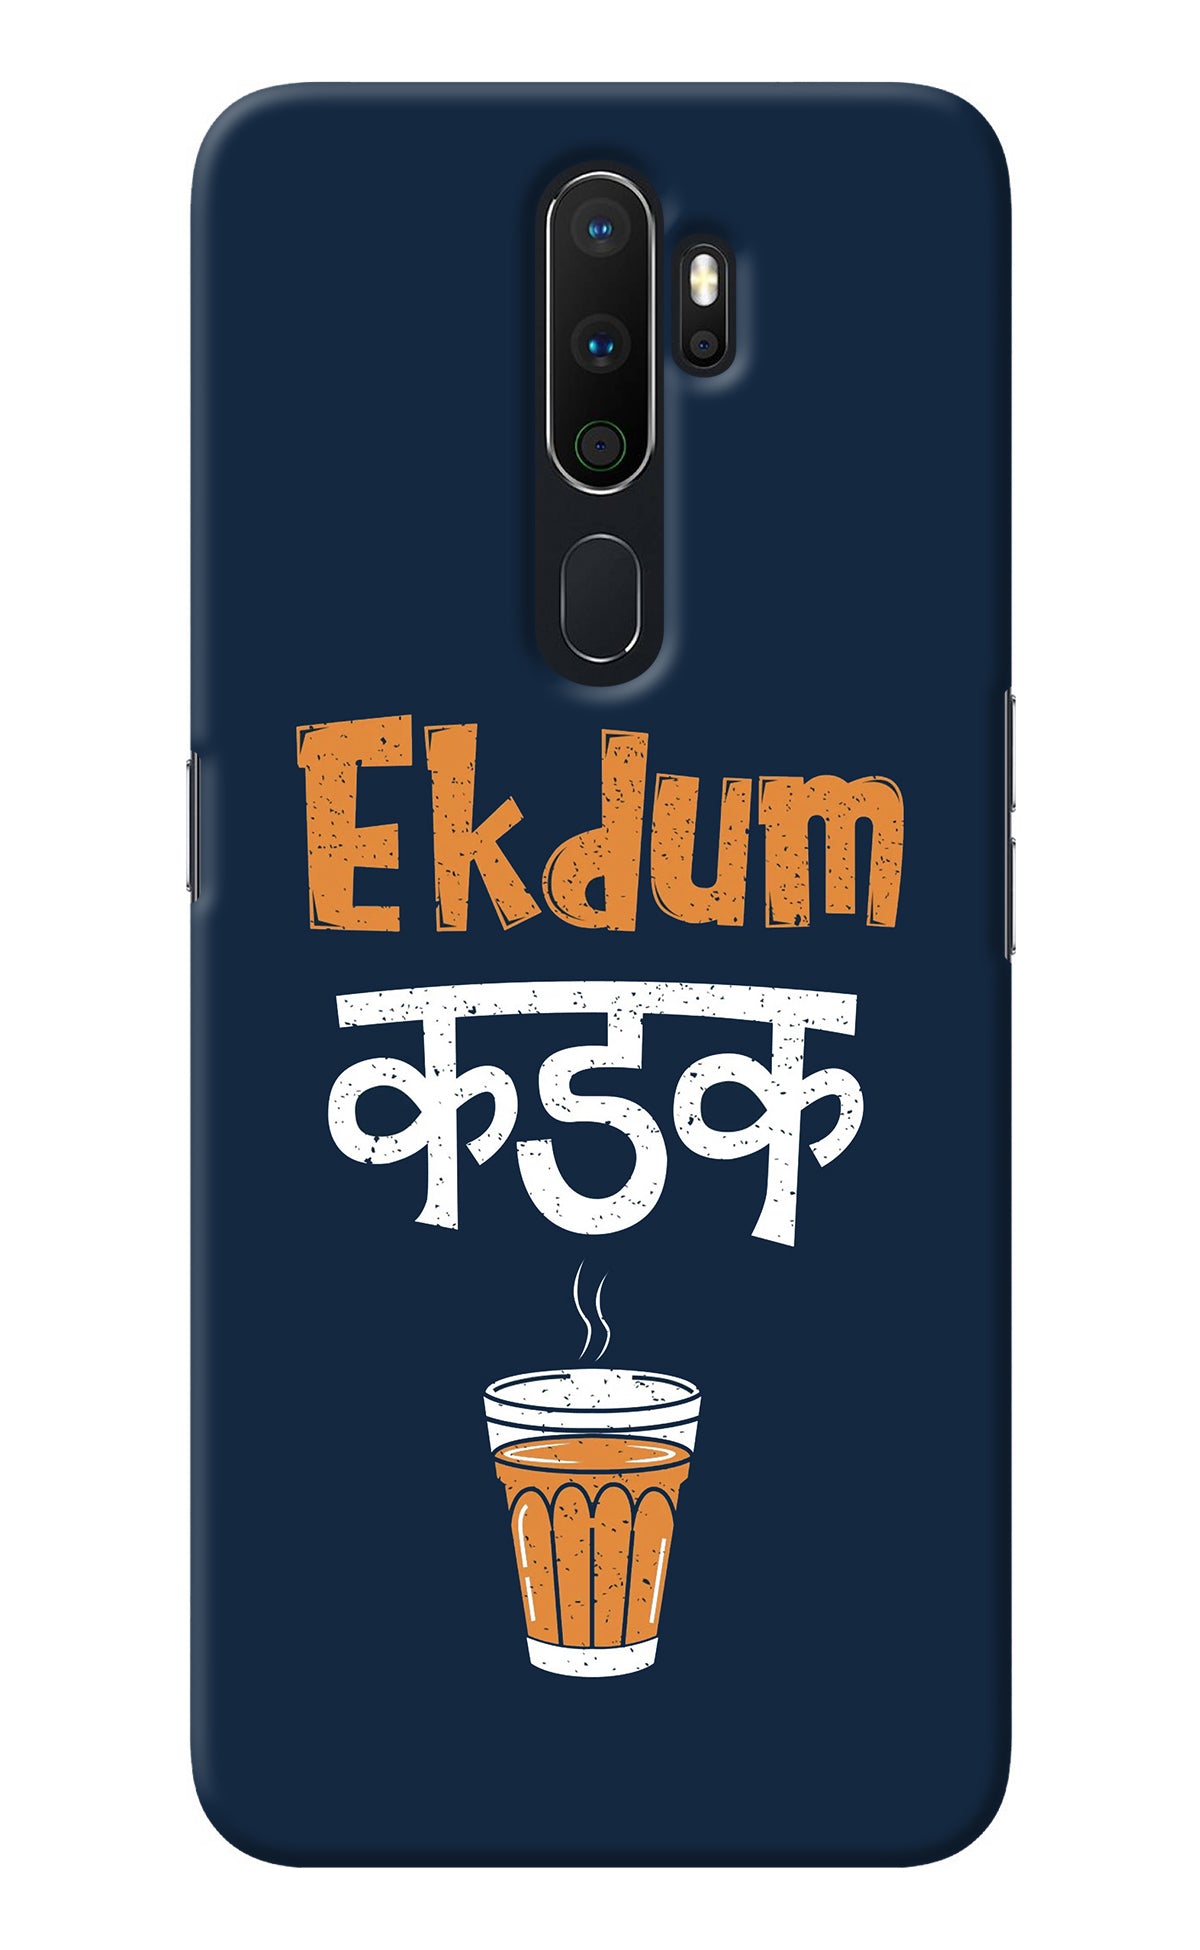 Ekdum Kadak Chai Oppo A5 2020/A9 2020 Back Cover